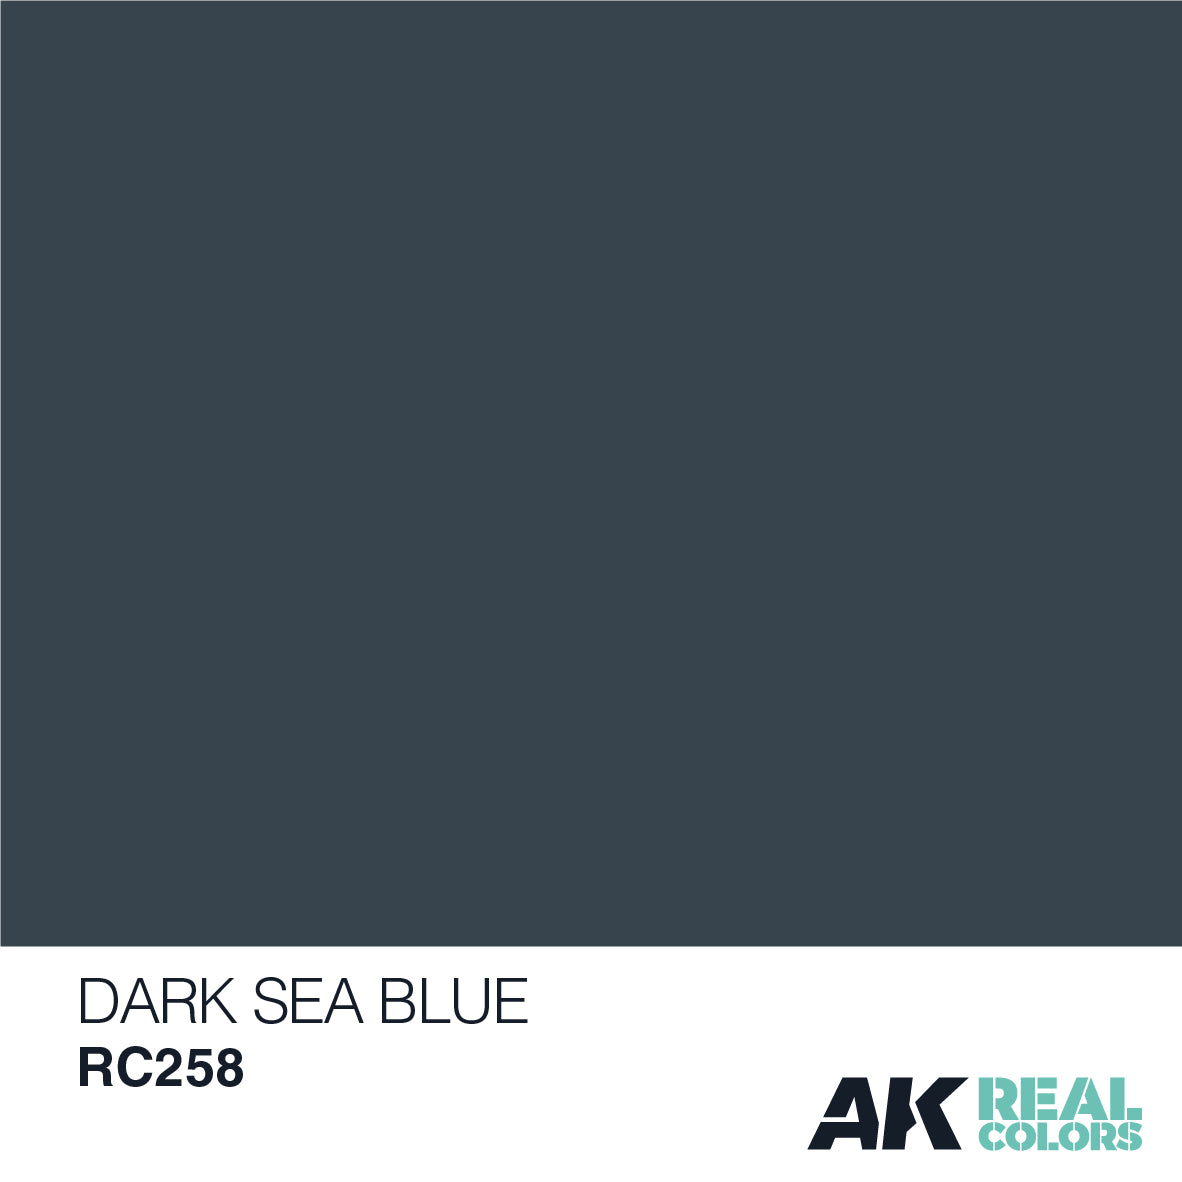 Dark Sea Blue 10ml - Loaded Dice Barry Vale of Glamorgan CF64 3HD